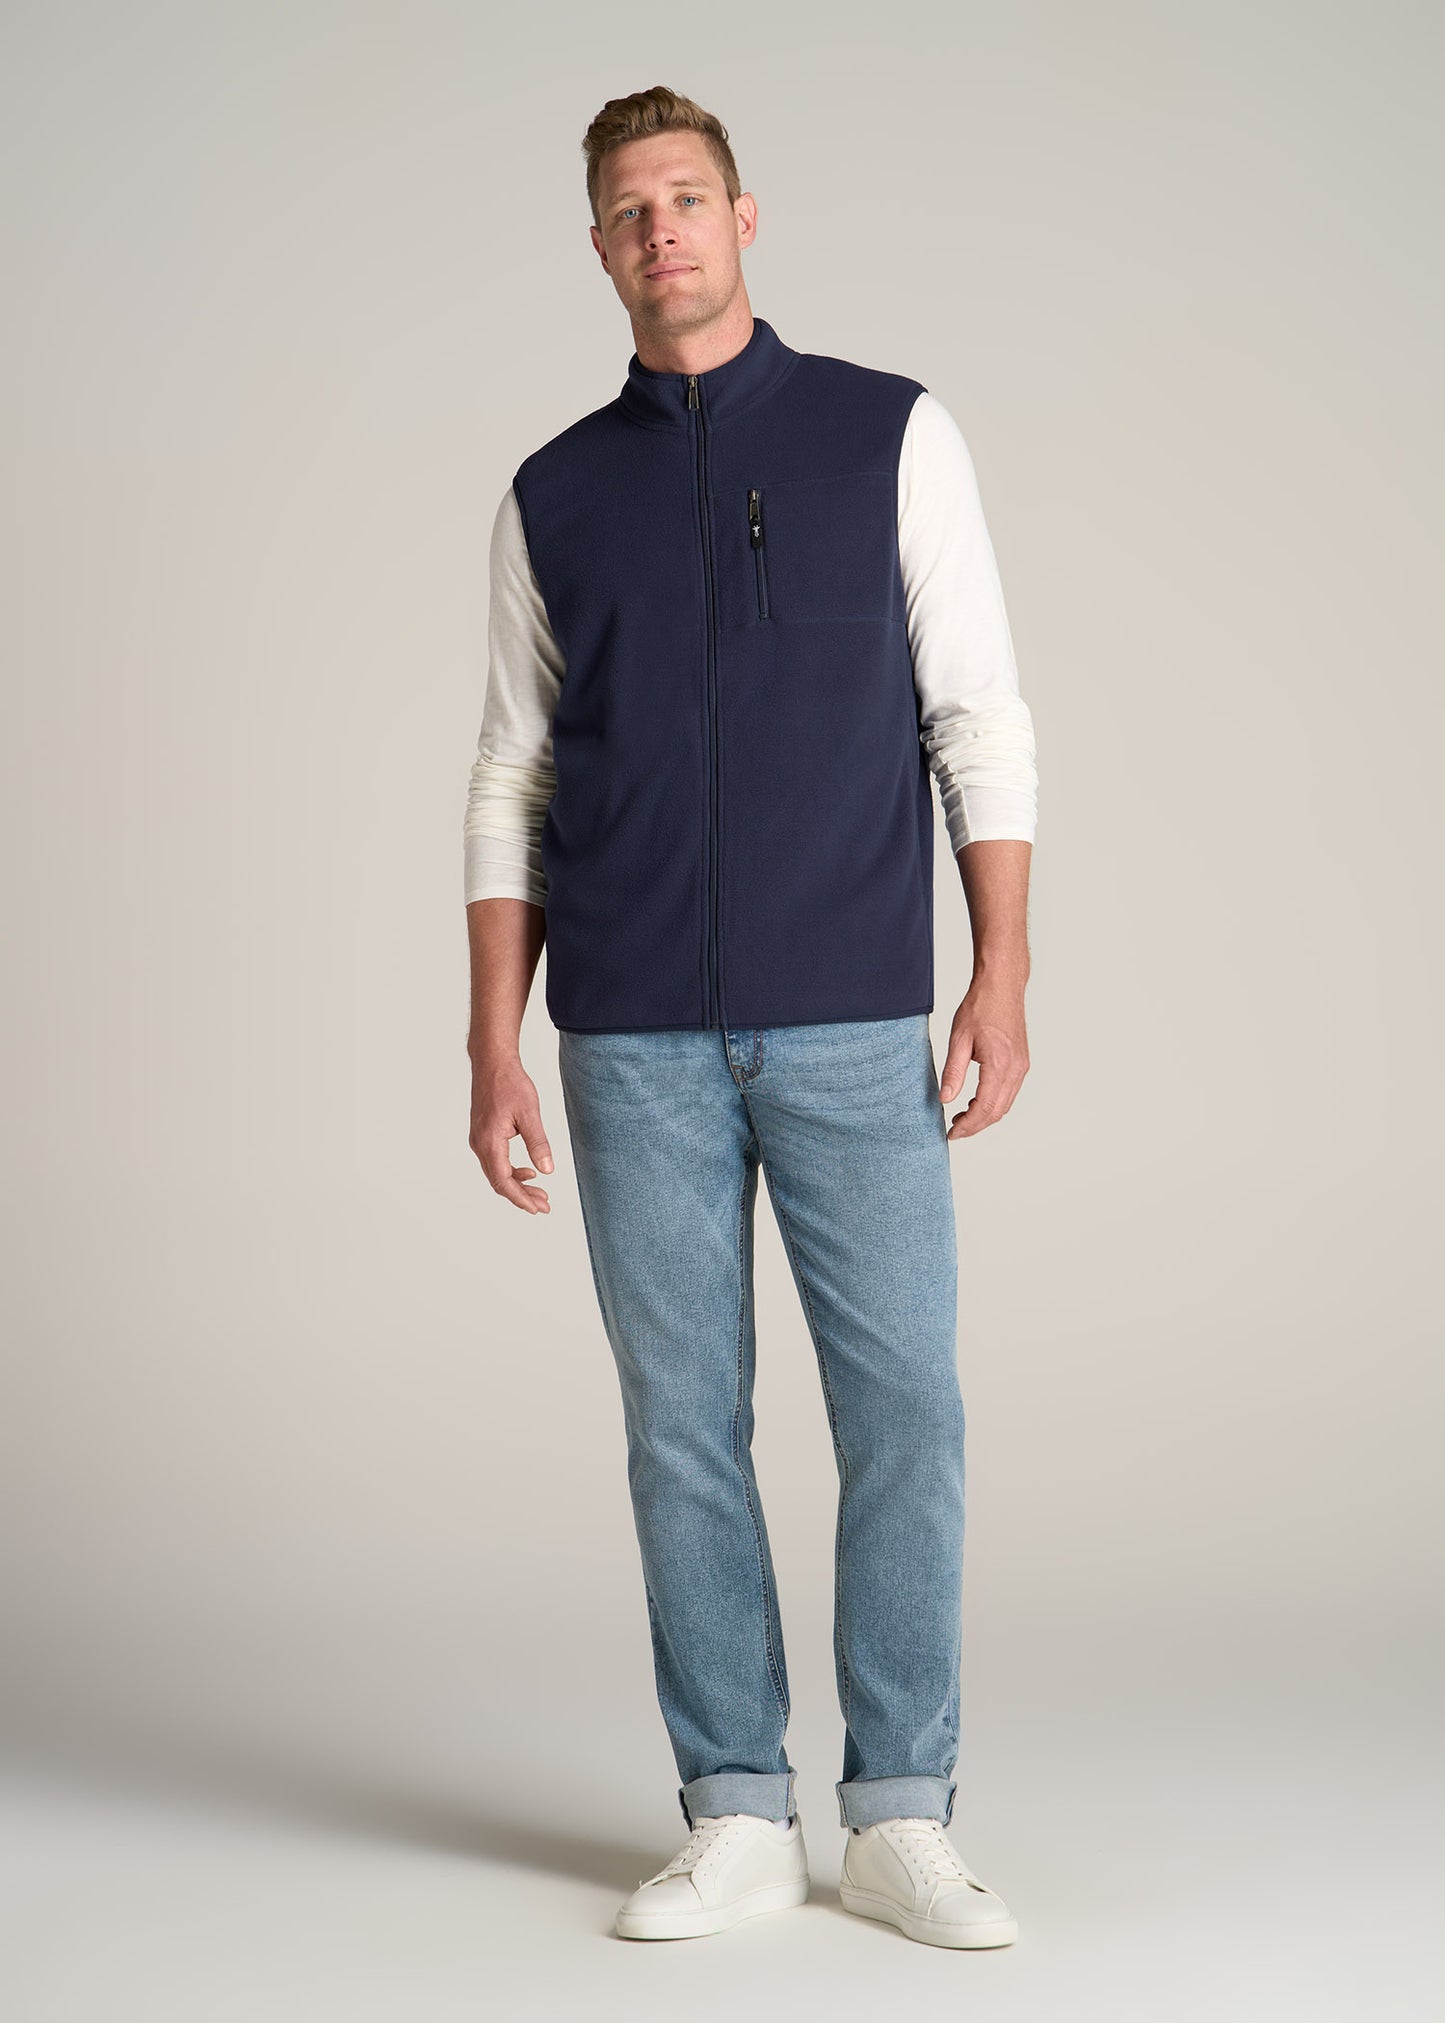 American-Tall-Men-Polar-Fleece-Sweater-Full-Zip-Vest-Regal-Blue-full